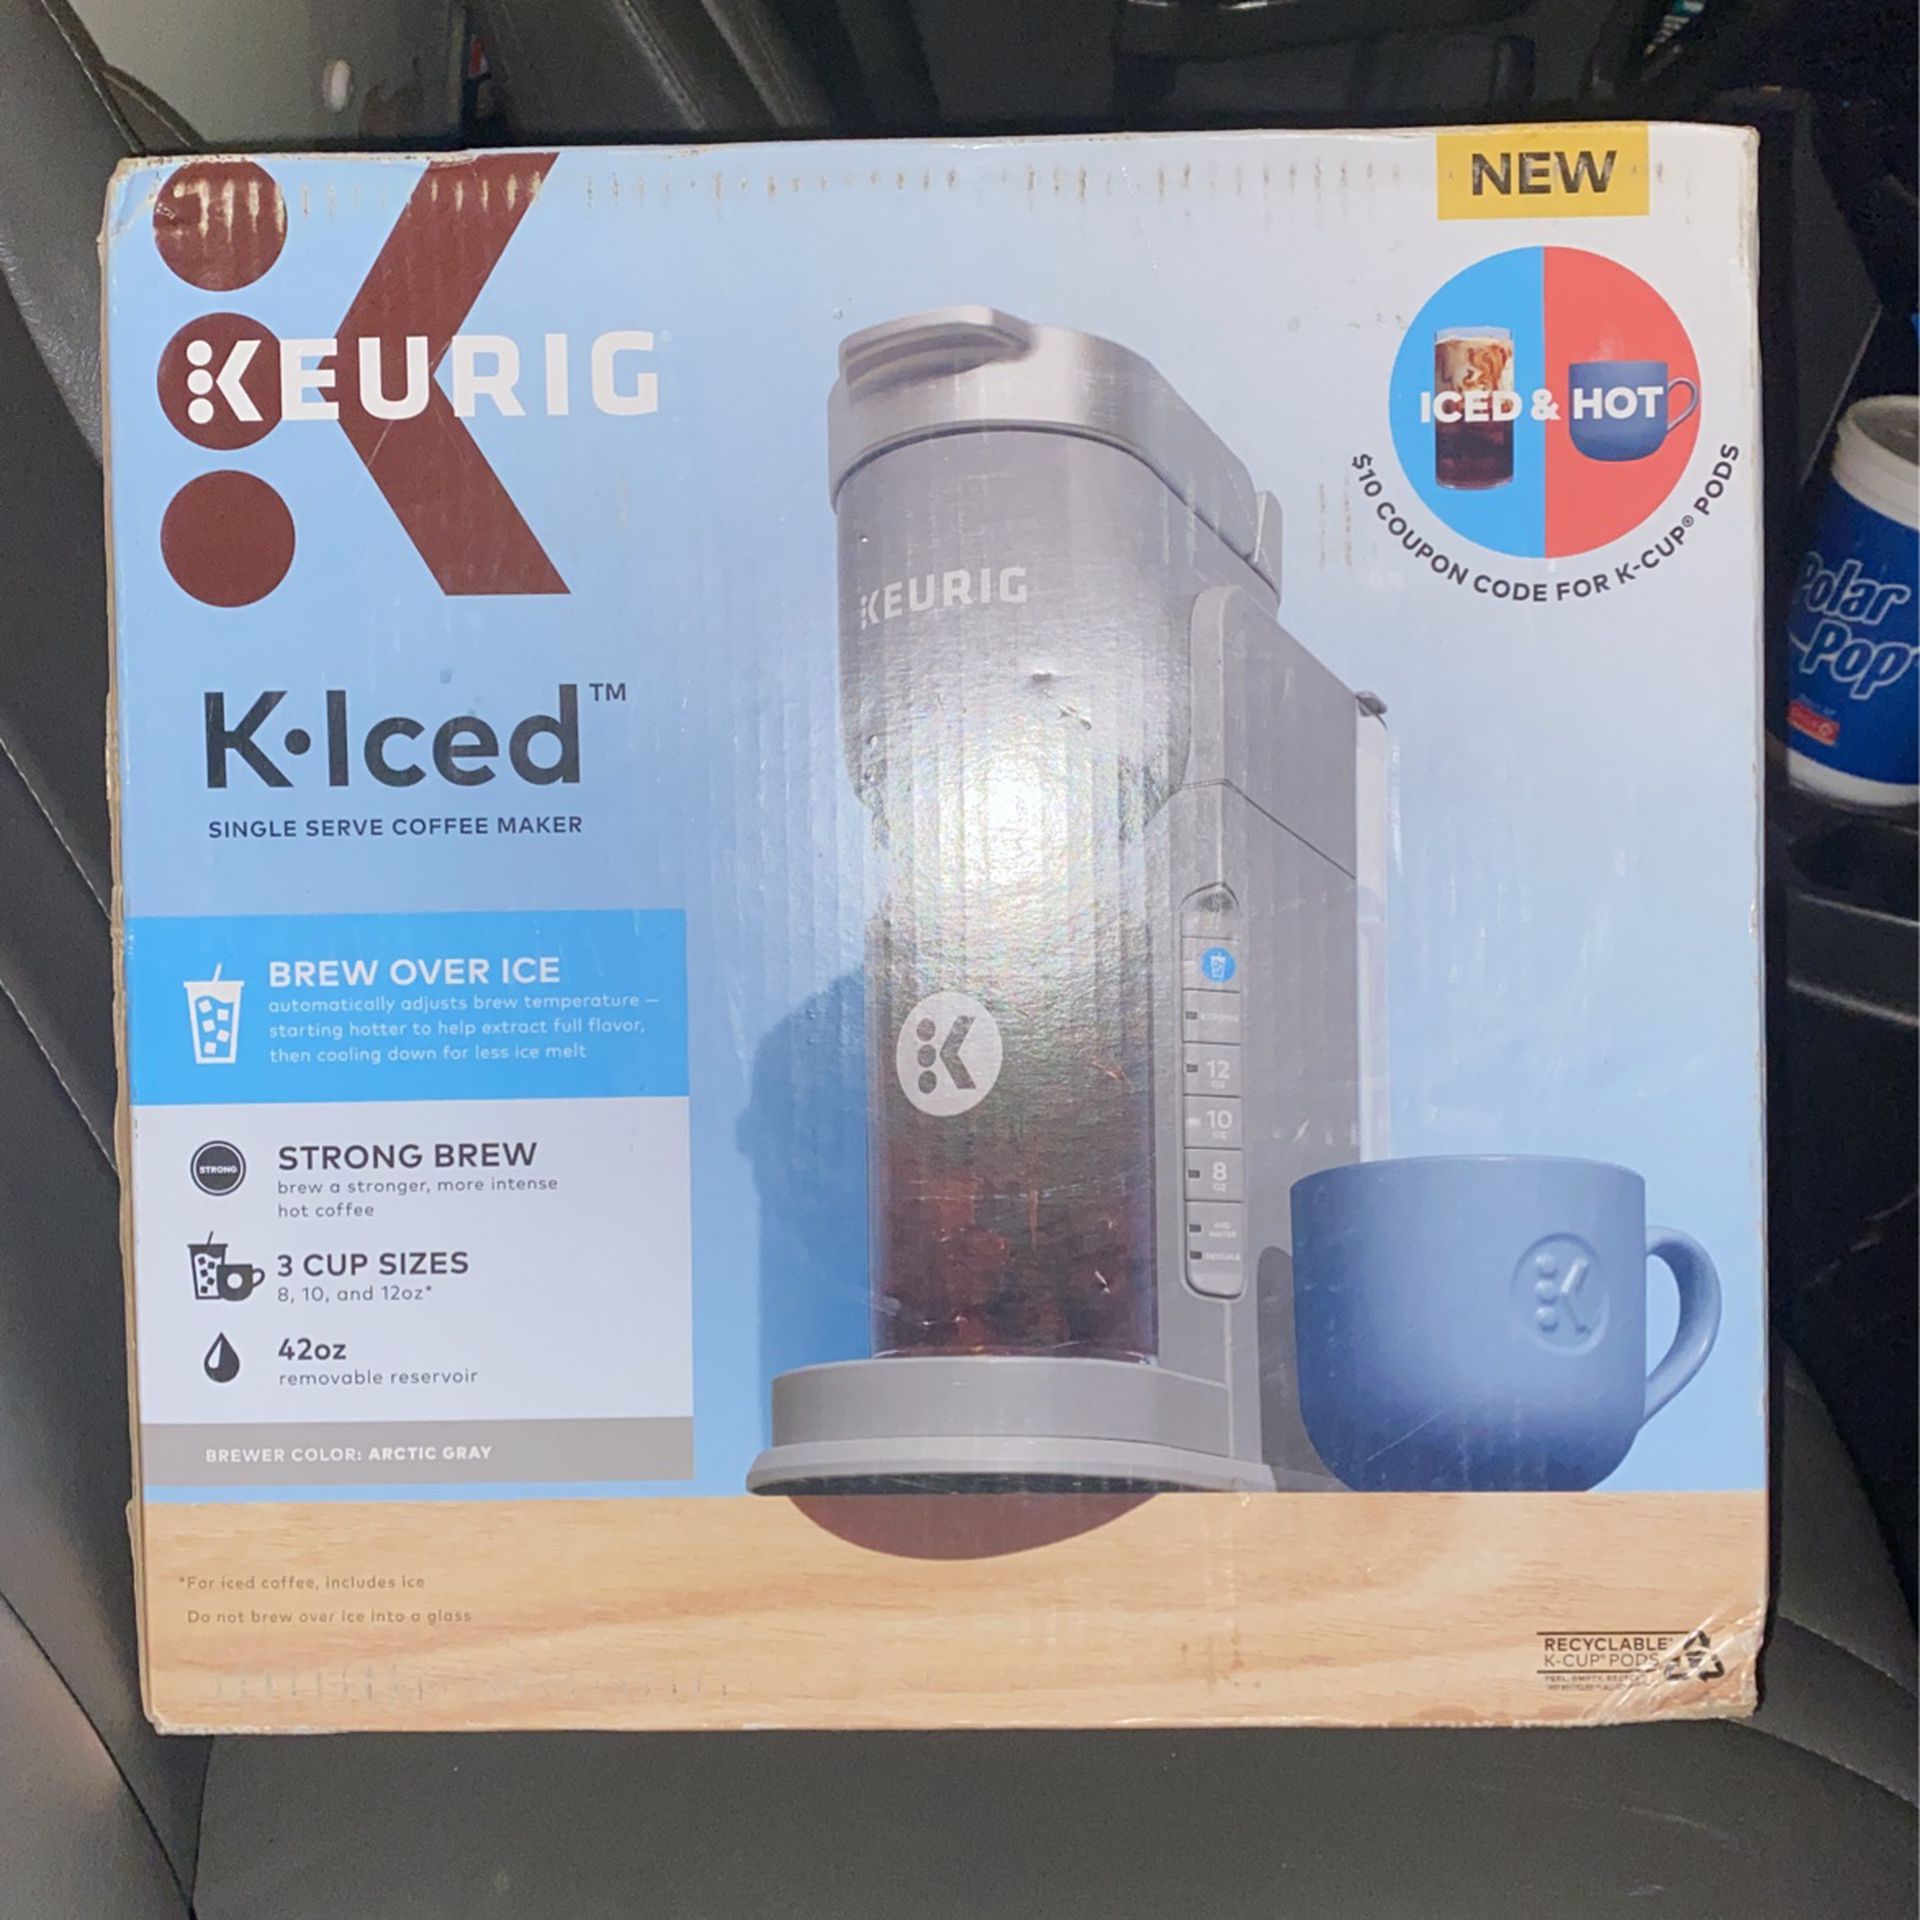 K-iced Single Serve Coffee Maker